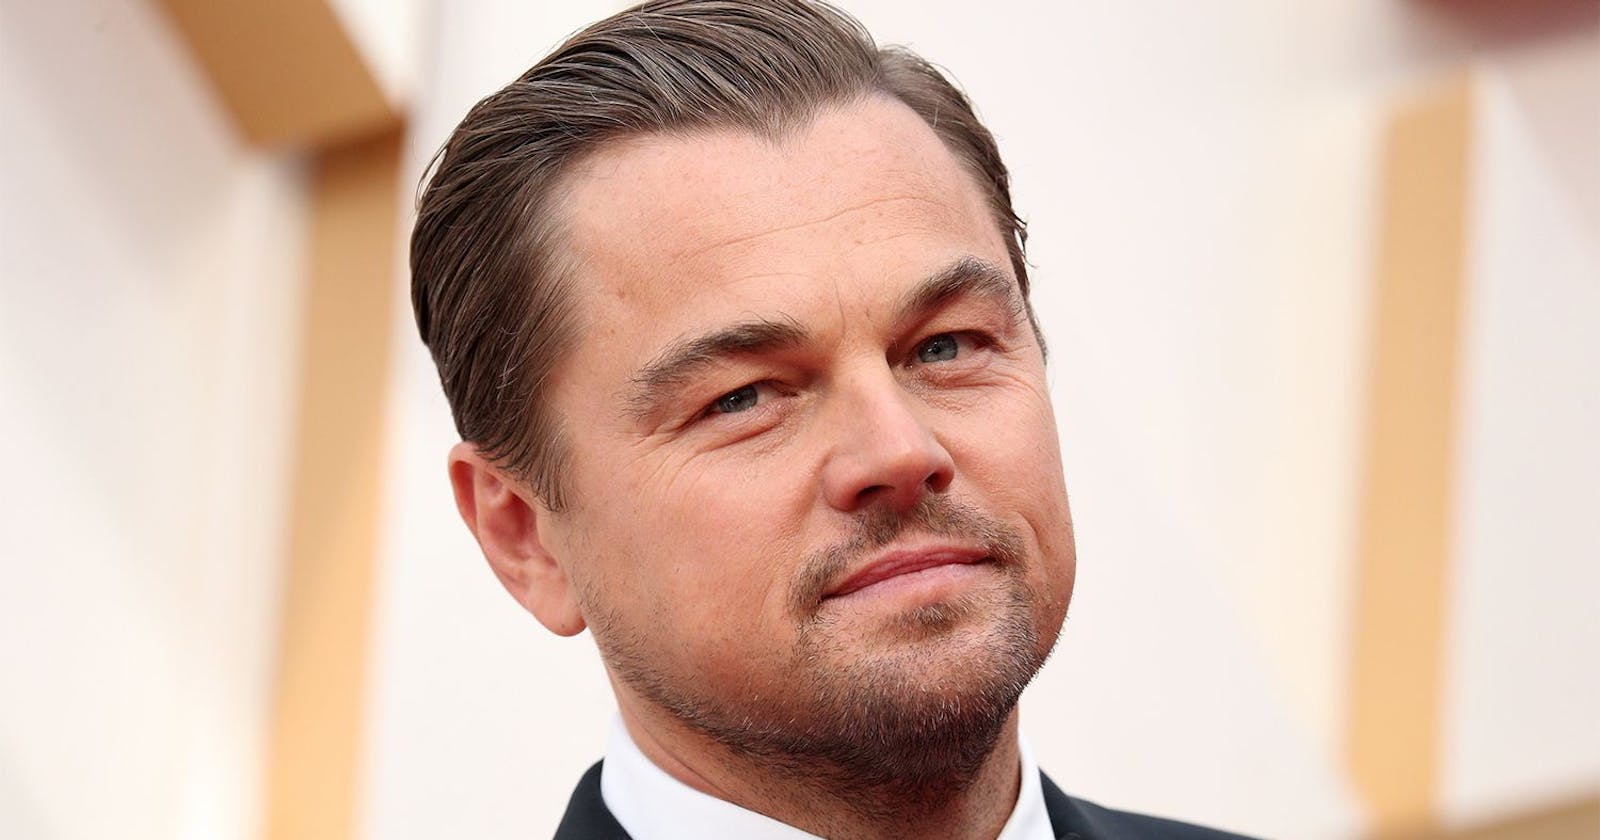 How Old Was Leonardo DiCaprio In Titanic?